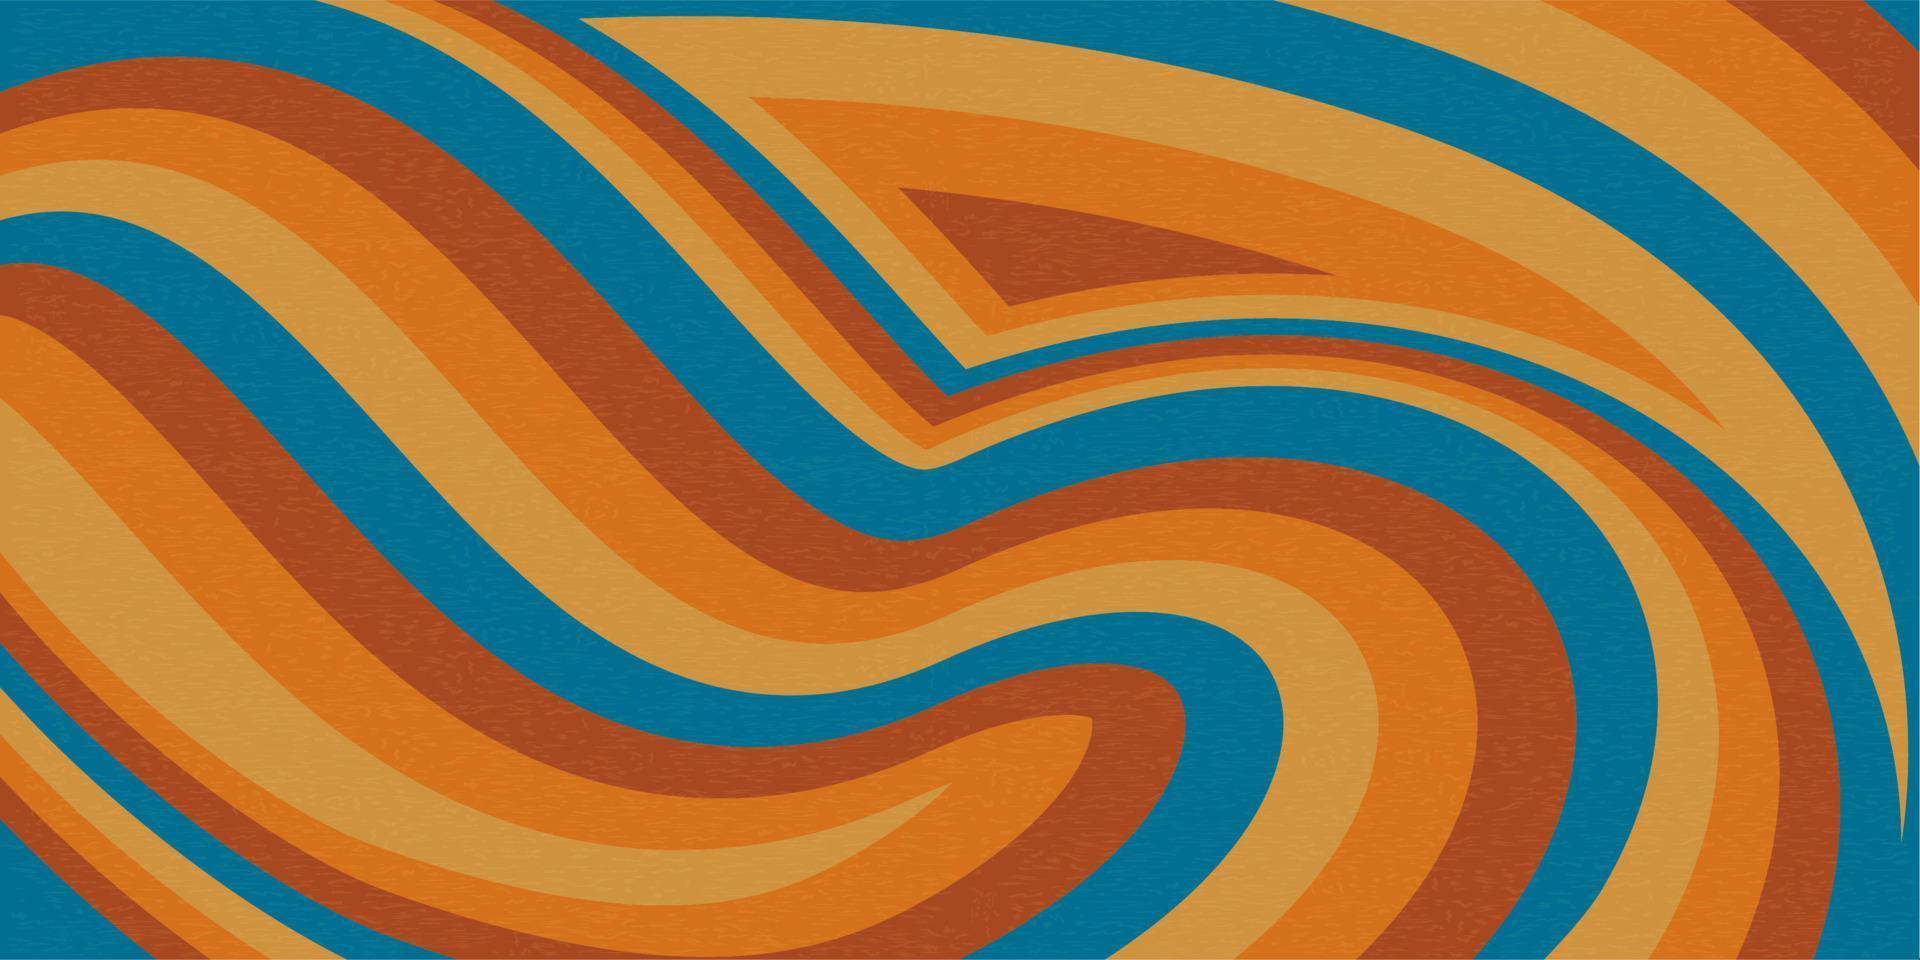 abstrakt retro färgrik 70s psychedelic estetisk vektor illustration bakgrund.